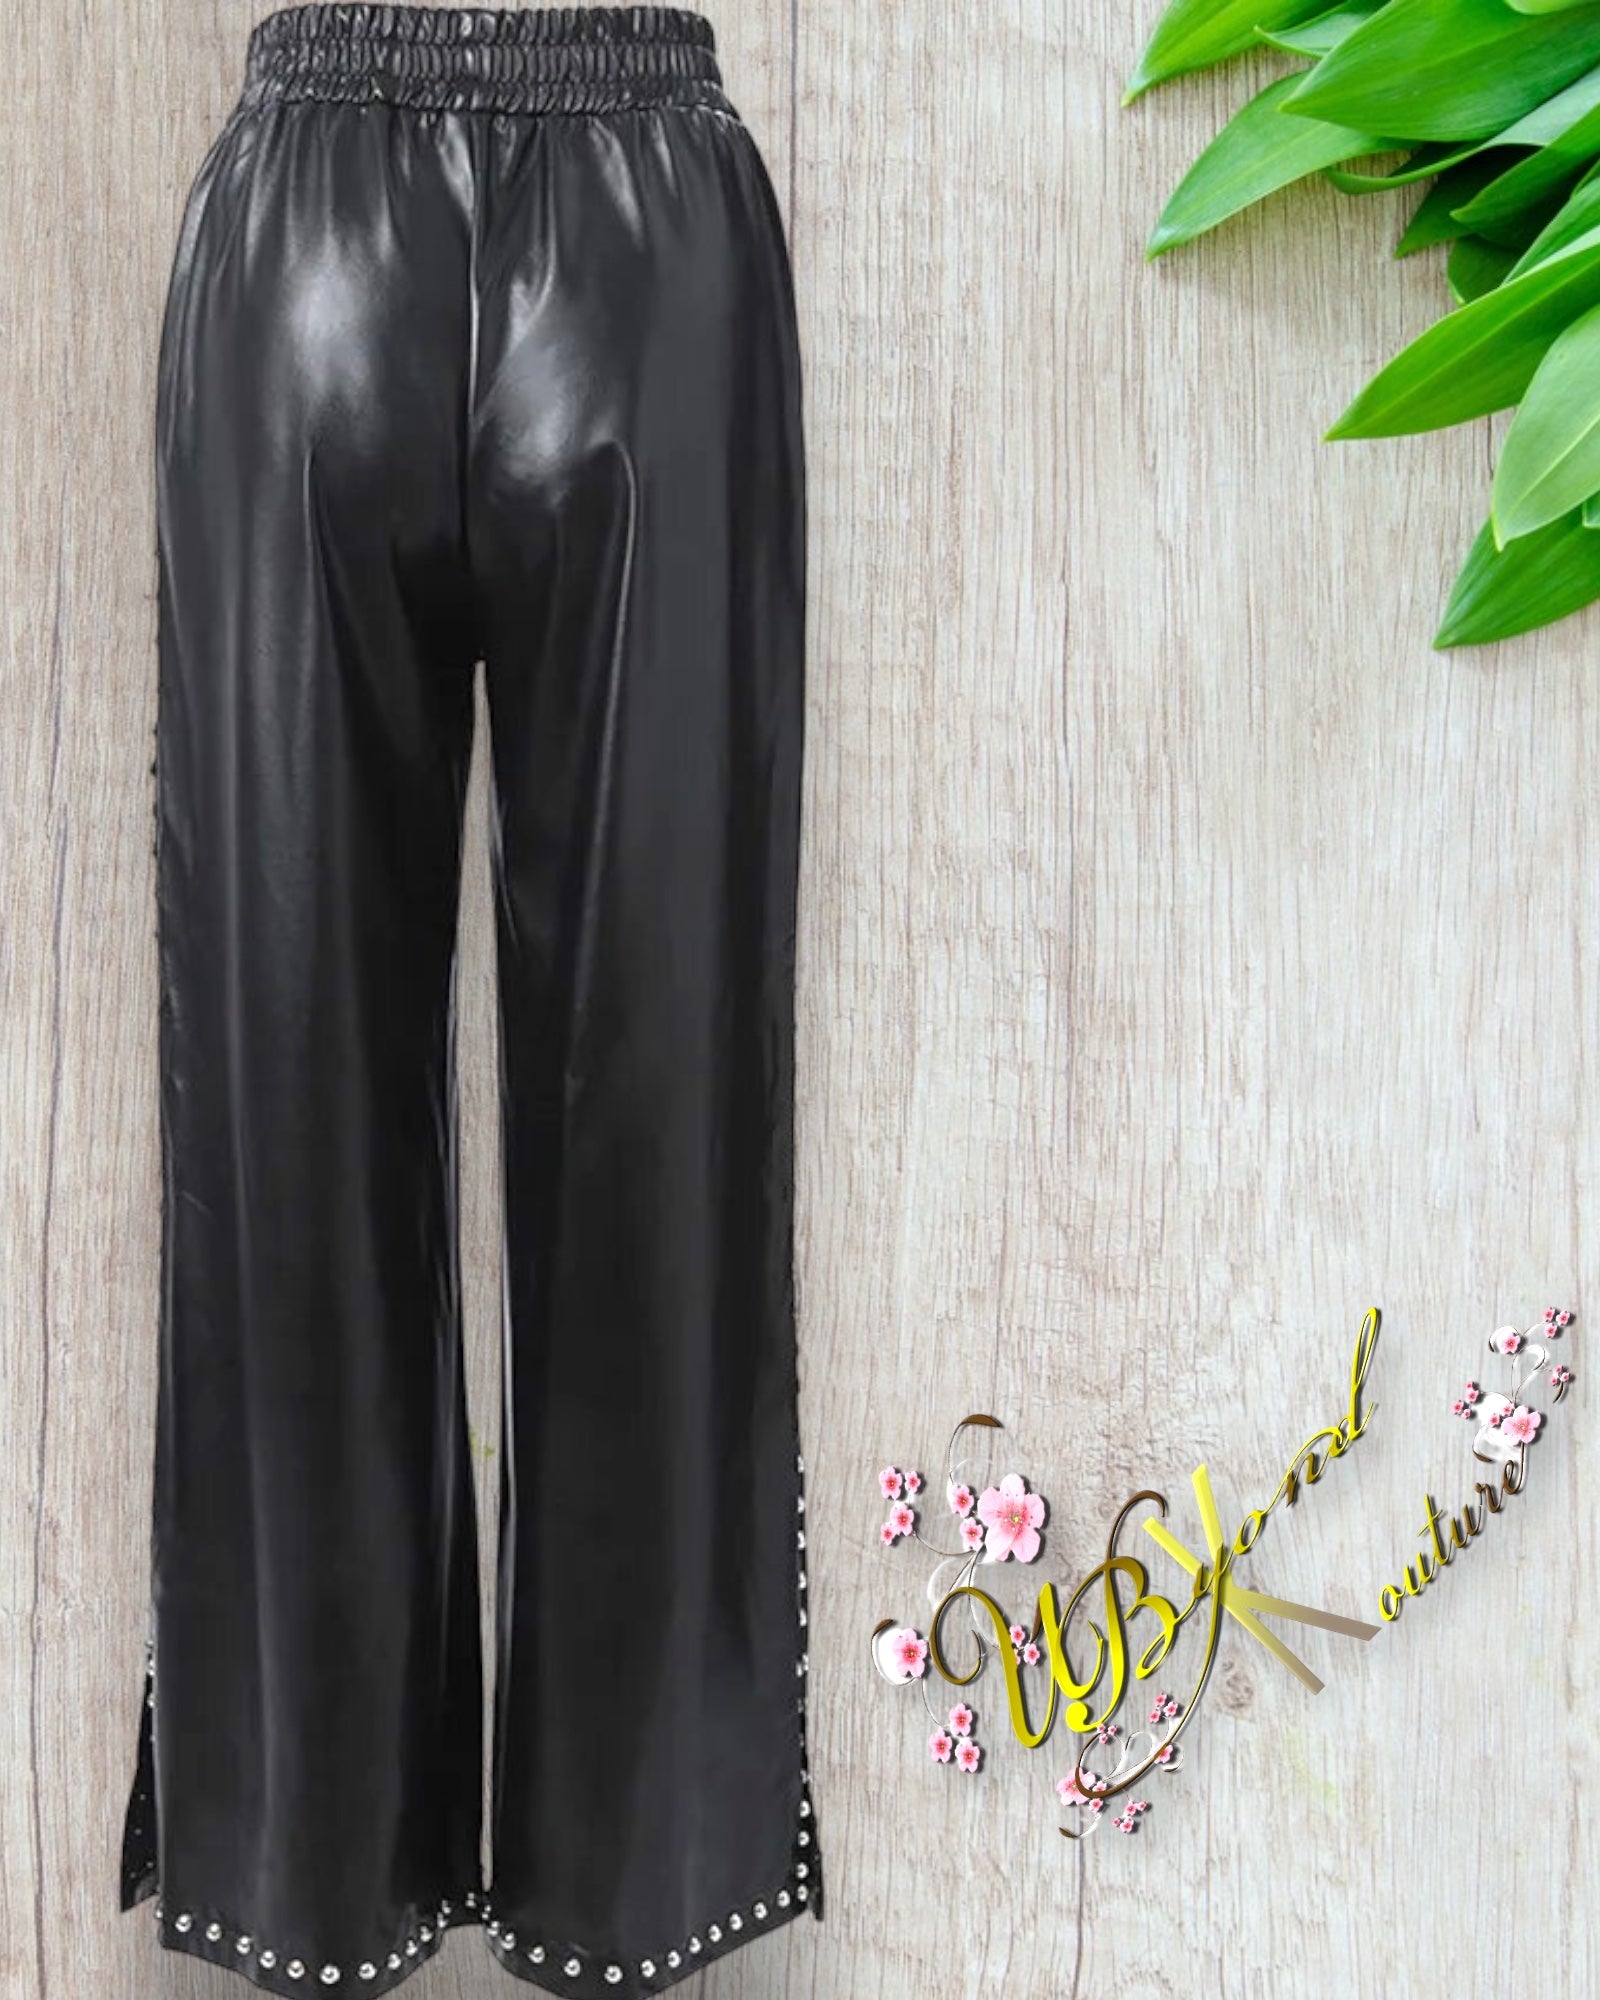 Chantelle Studded Decor Black PU Leather Pants